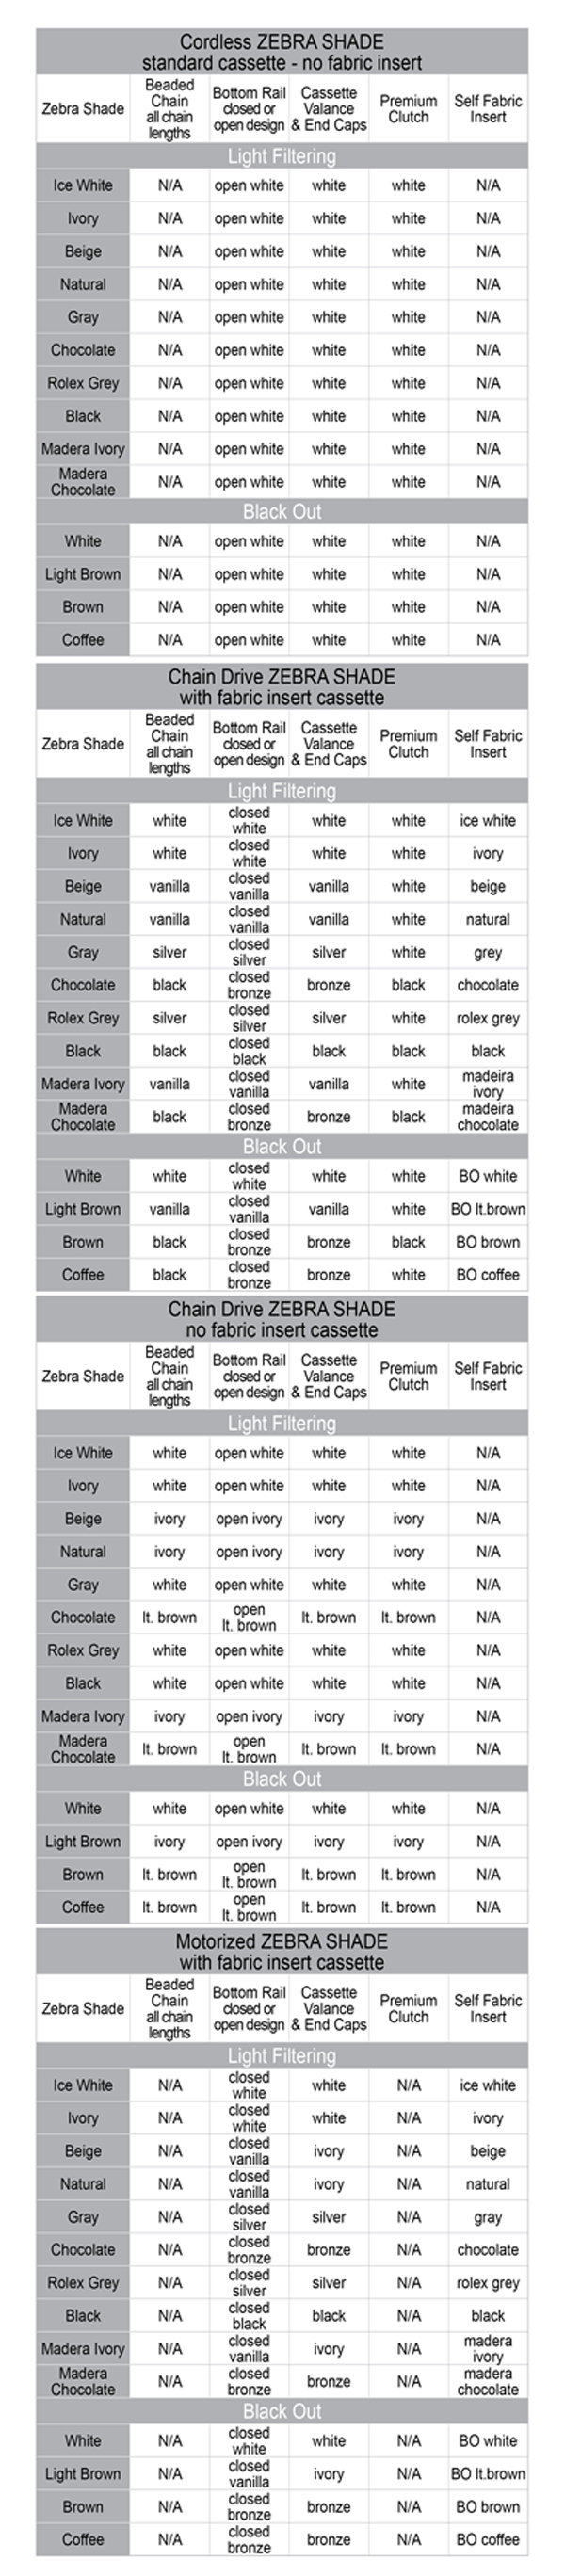 Zebra shade tech info